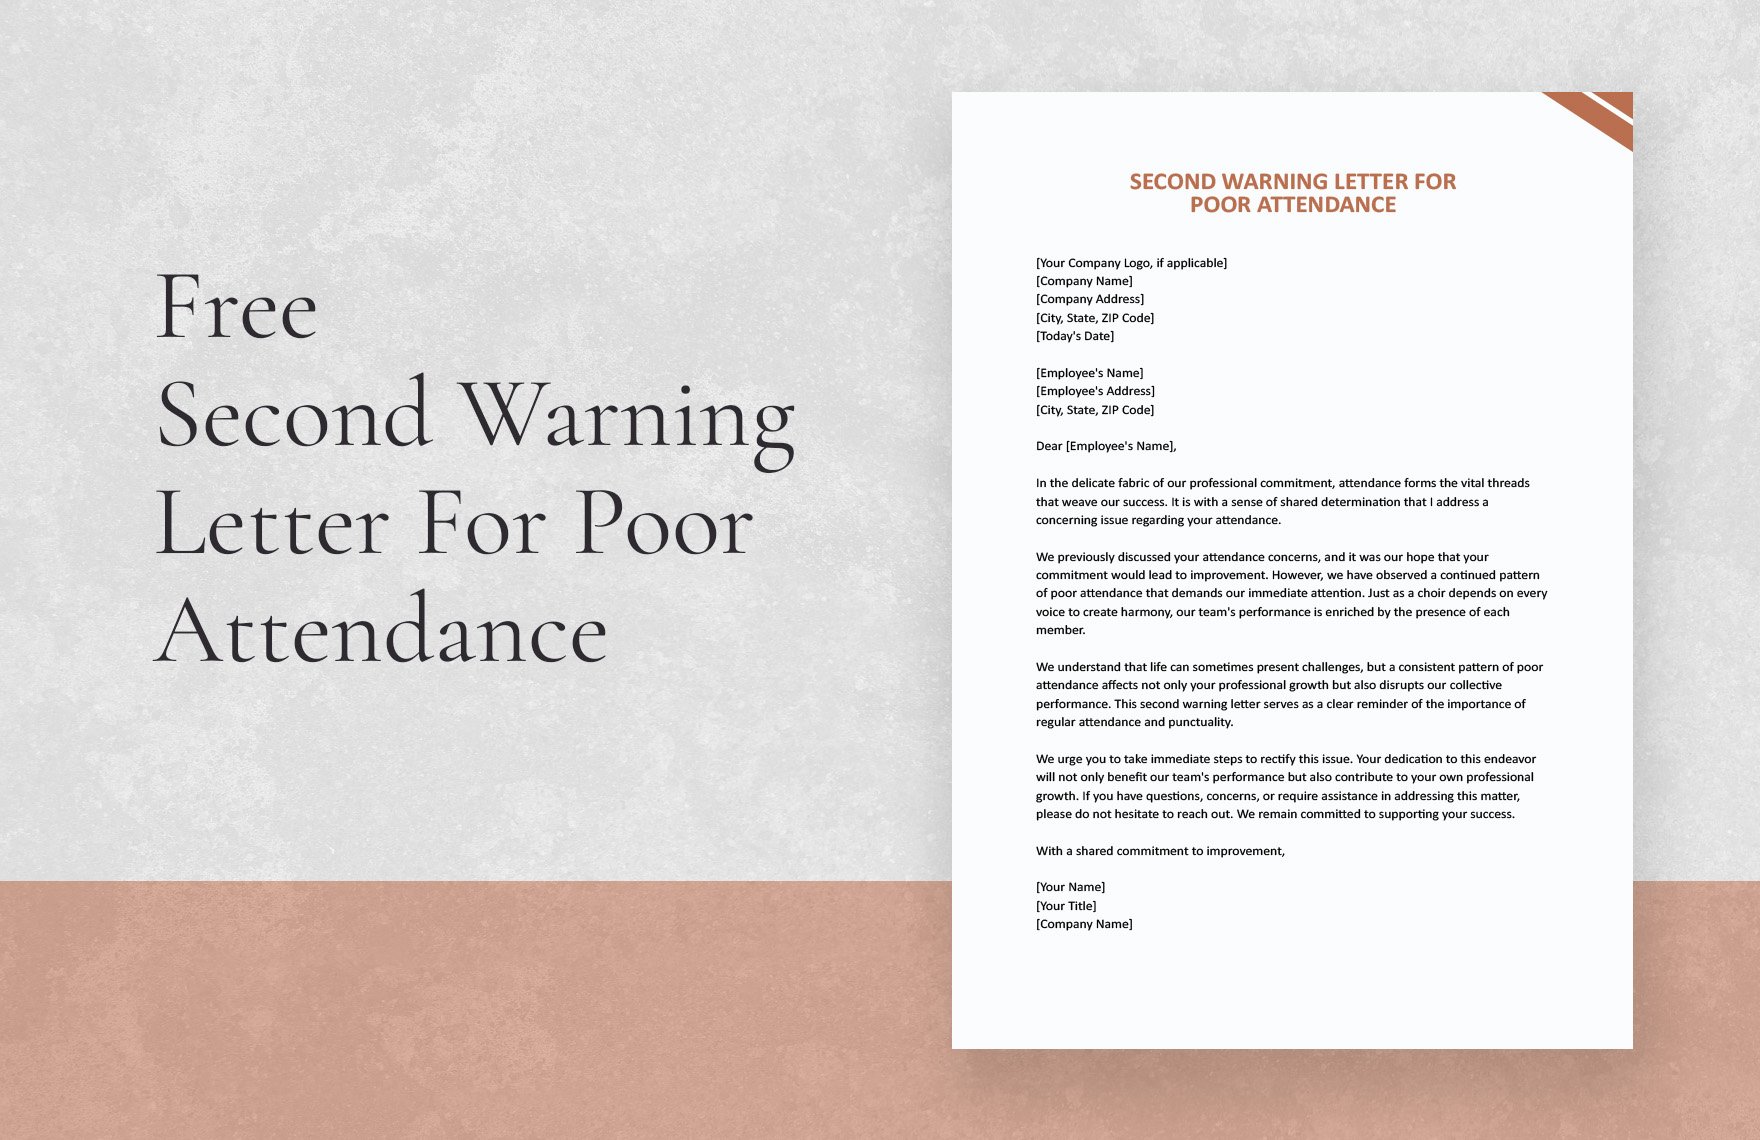 Second Warning Letter For Poor Attendance